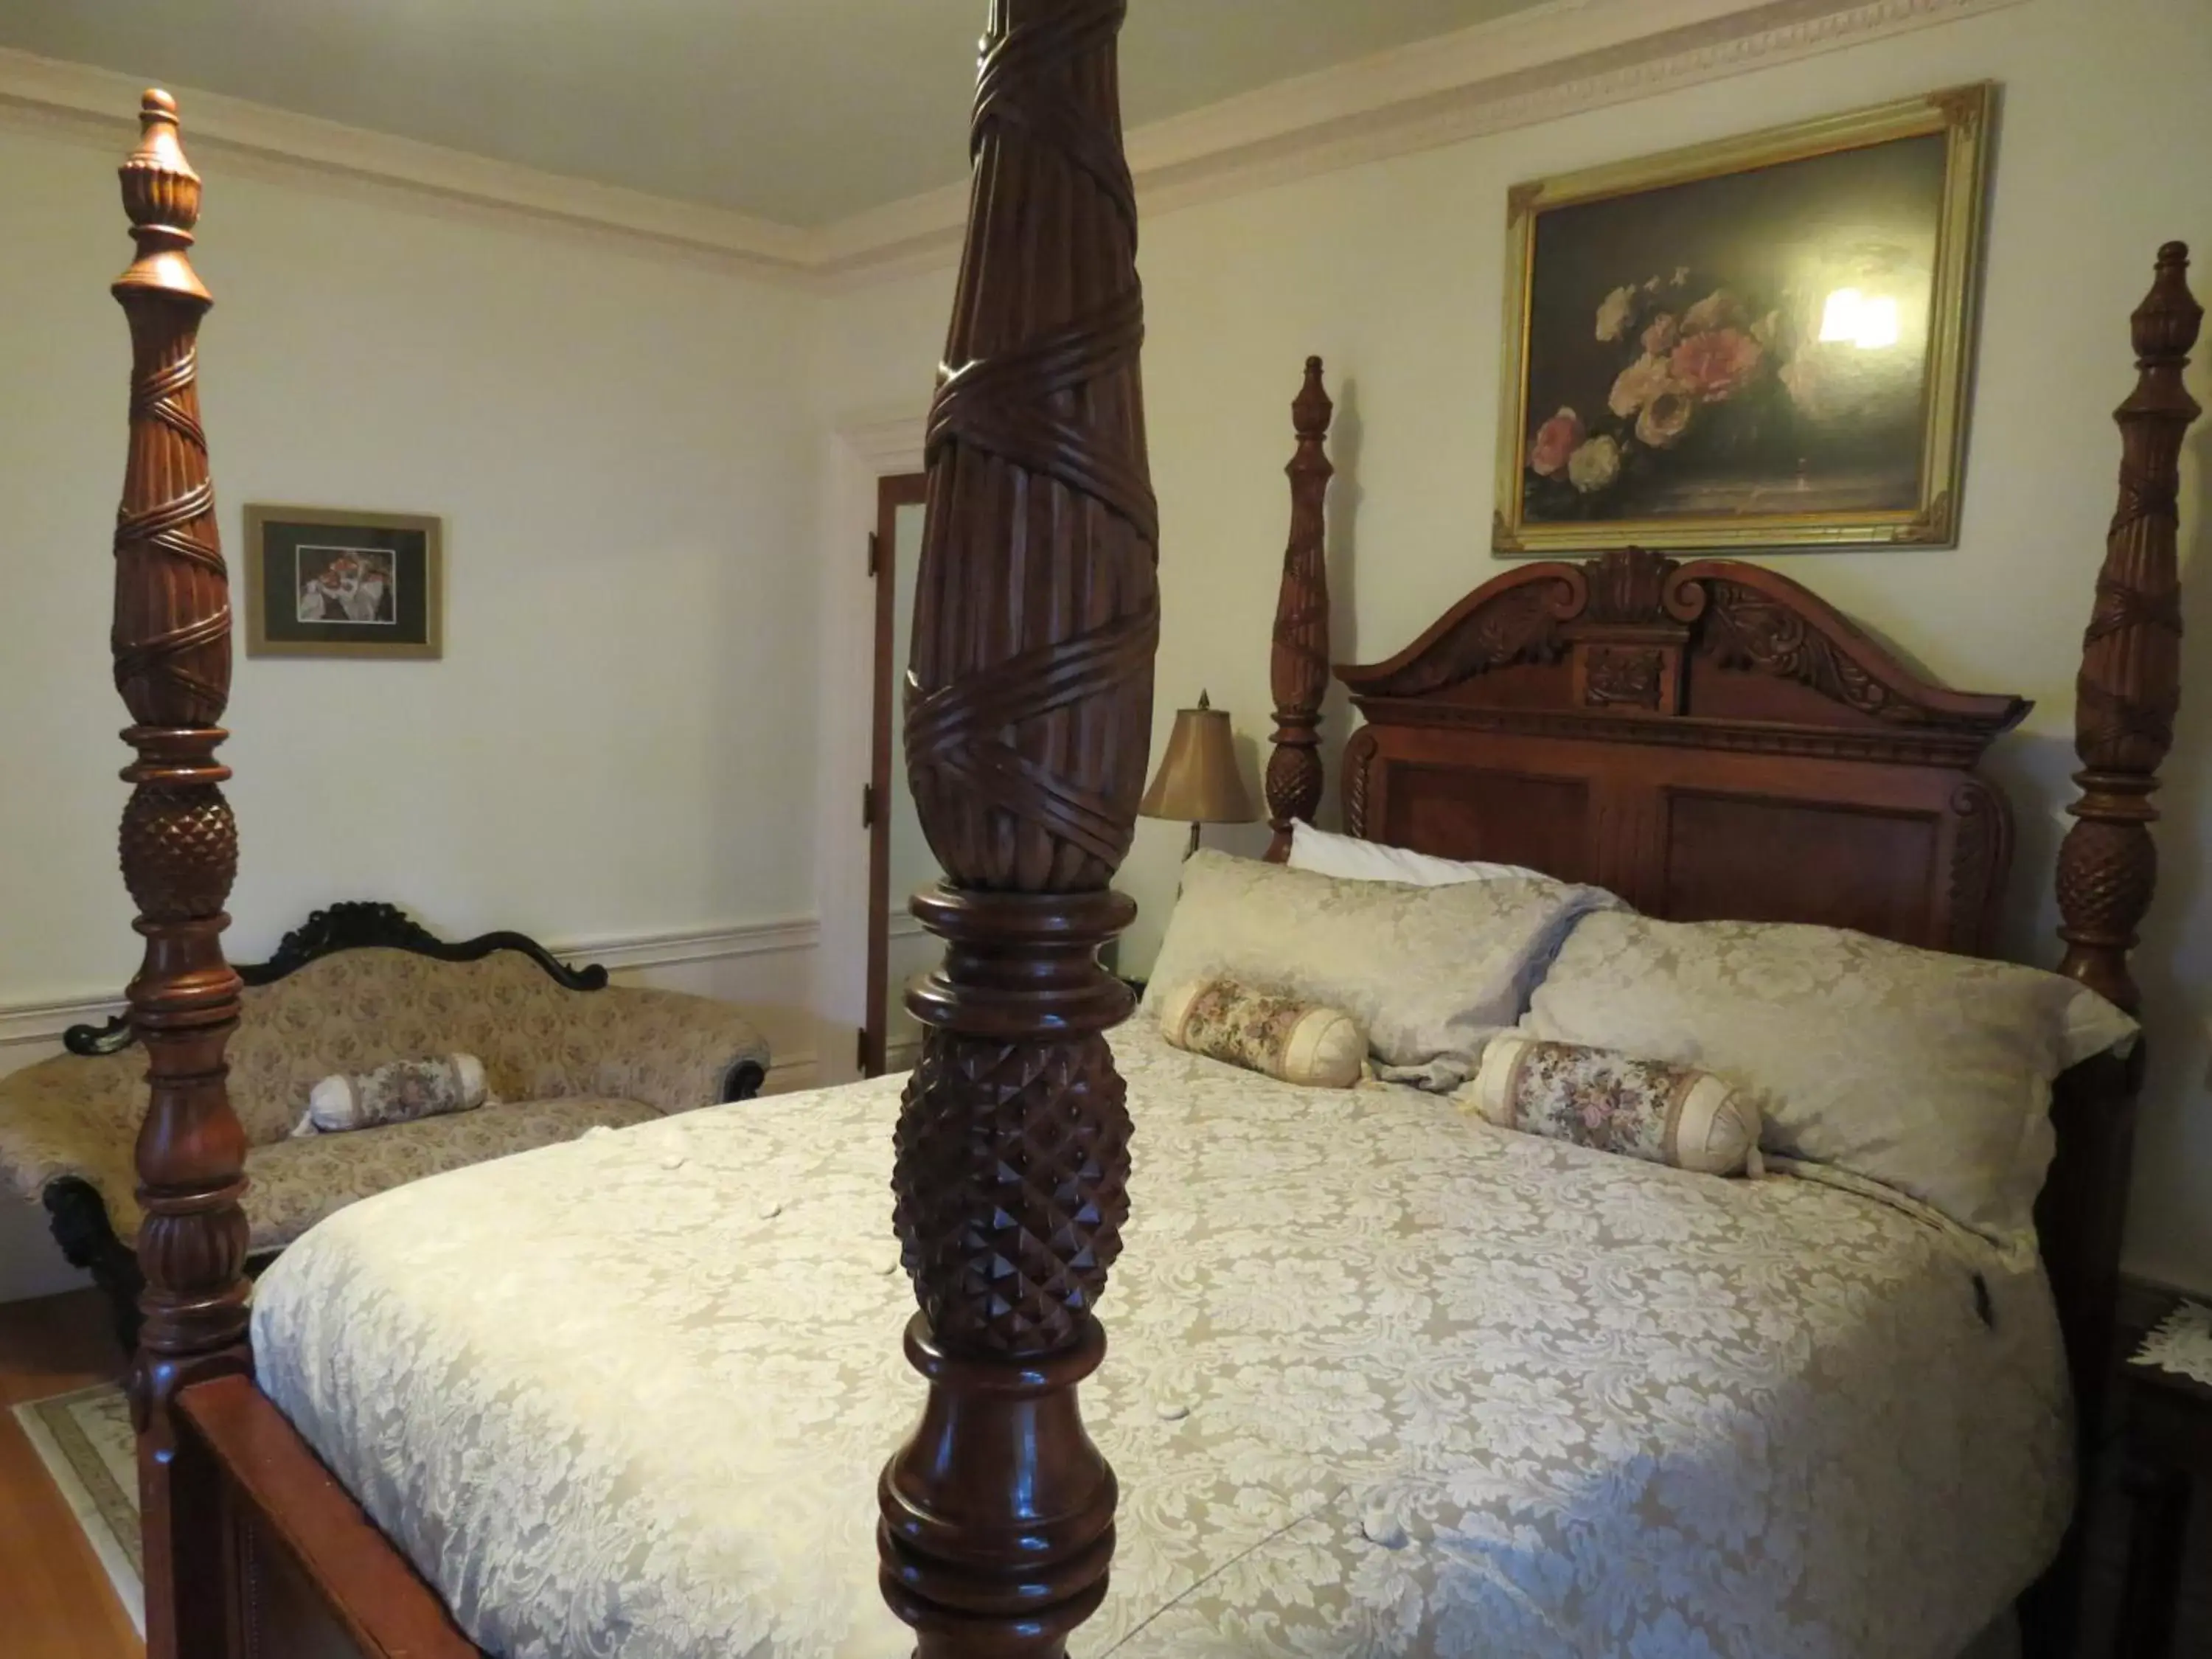 Bed, Room Photo in Silver Fountain Inn